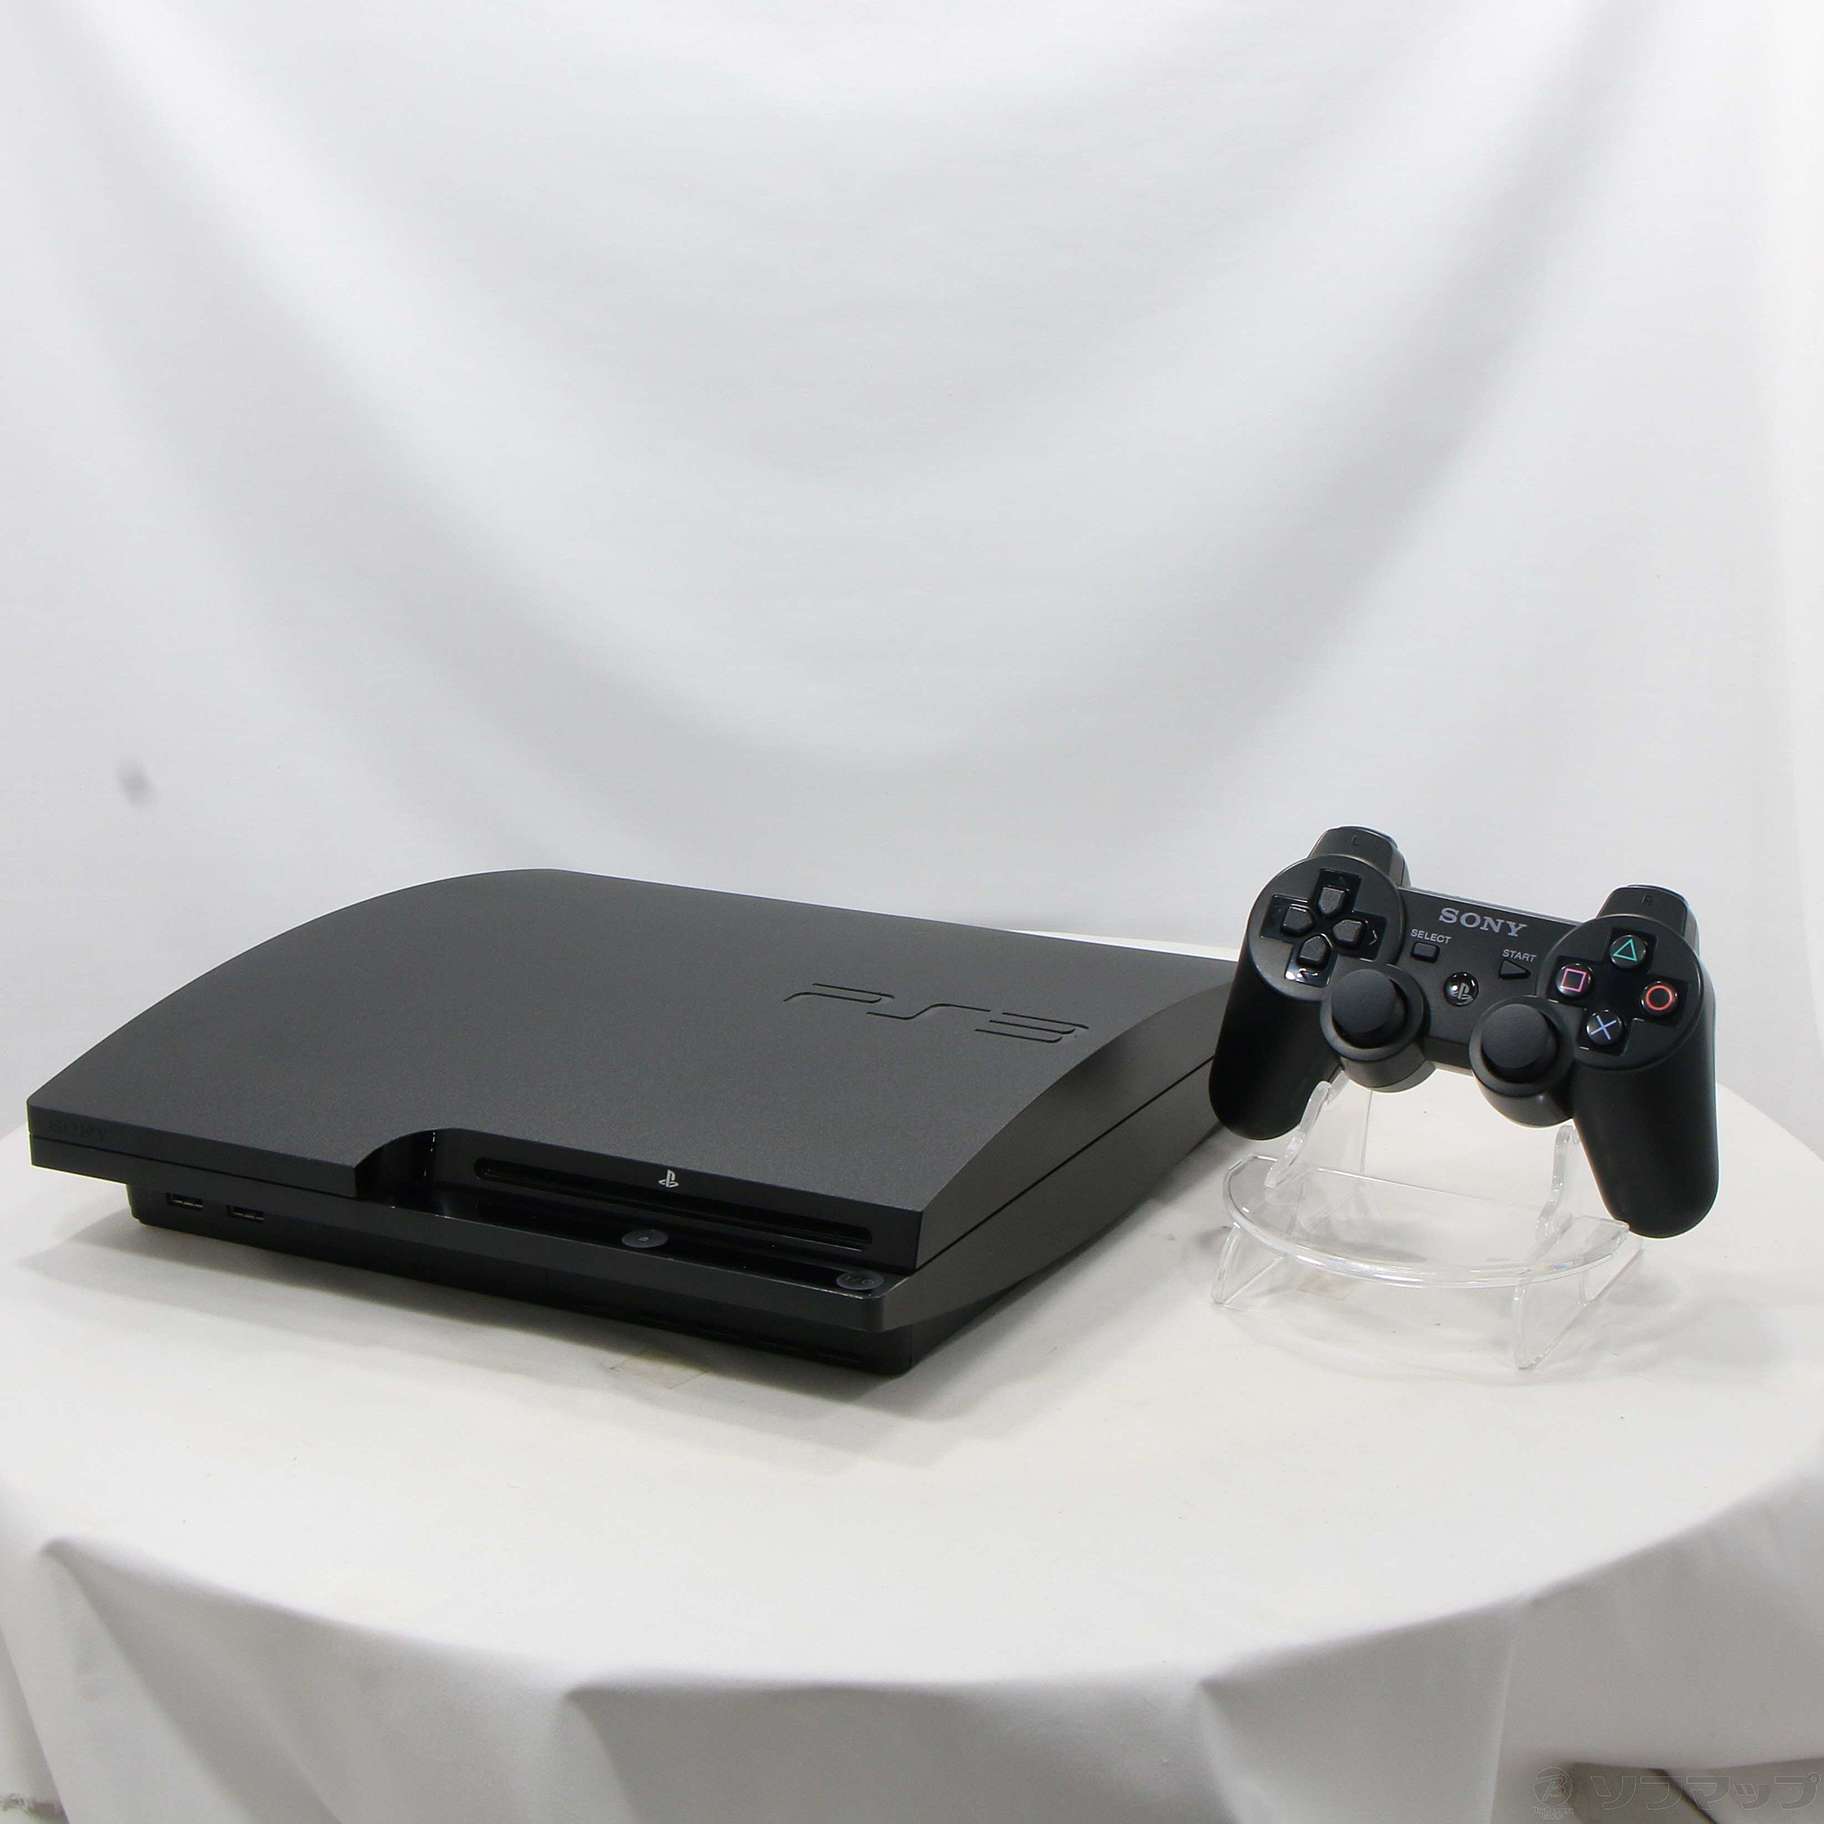 PlayStation 3 320GB チャコールブラック CECH-3000B